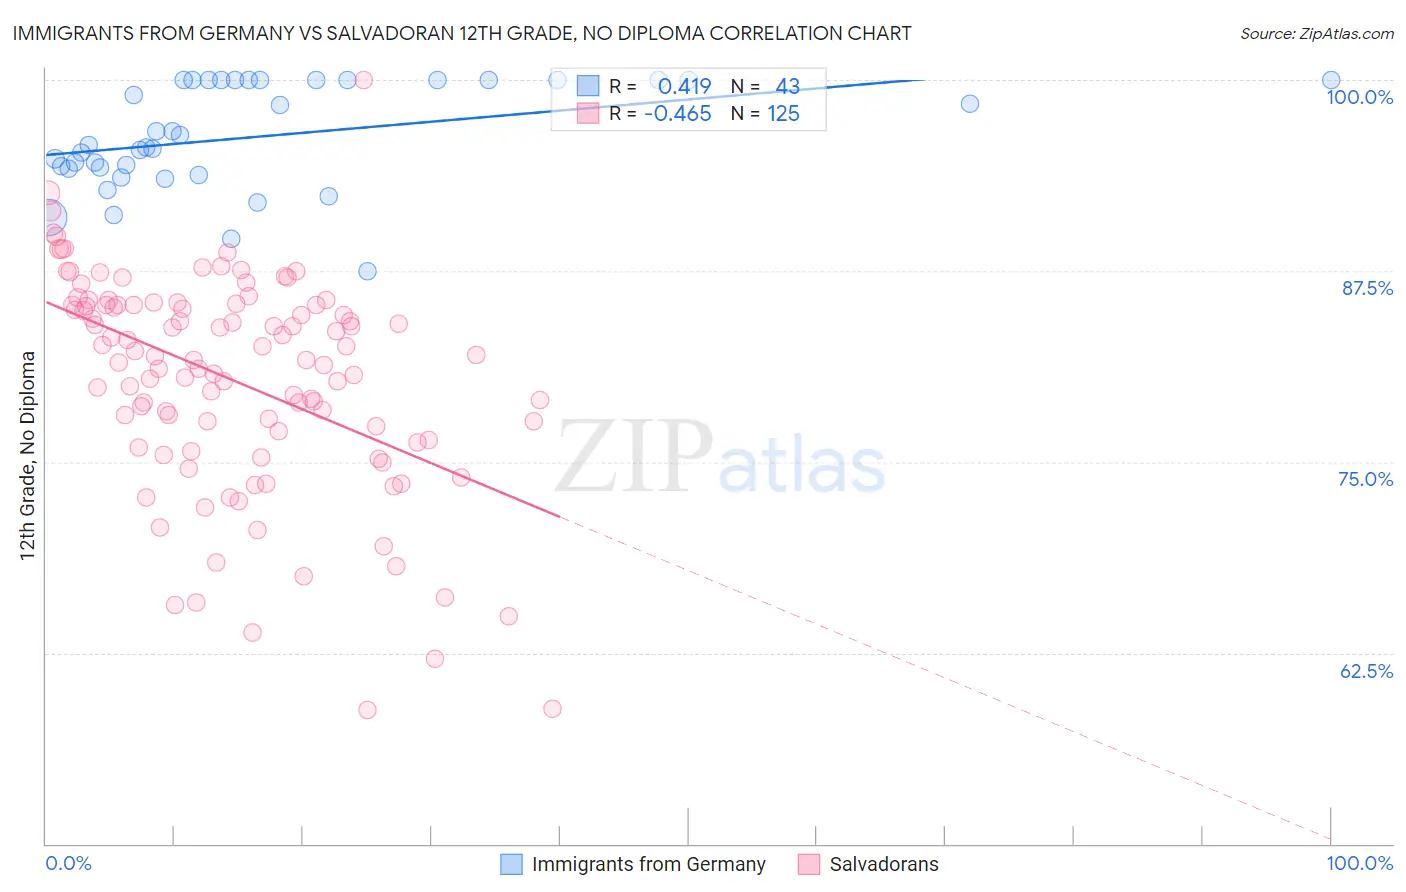 Immigrants from Germany vs Salvadoran 12th Grade, No Diploma